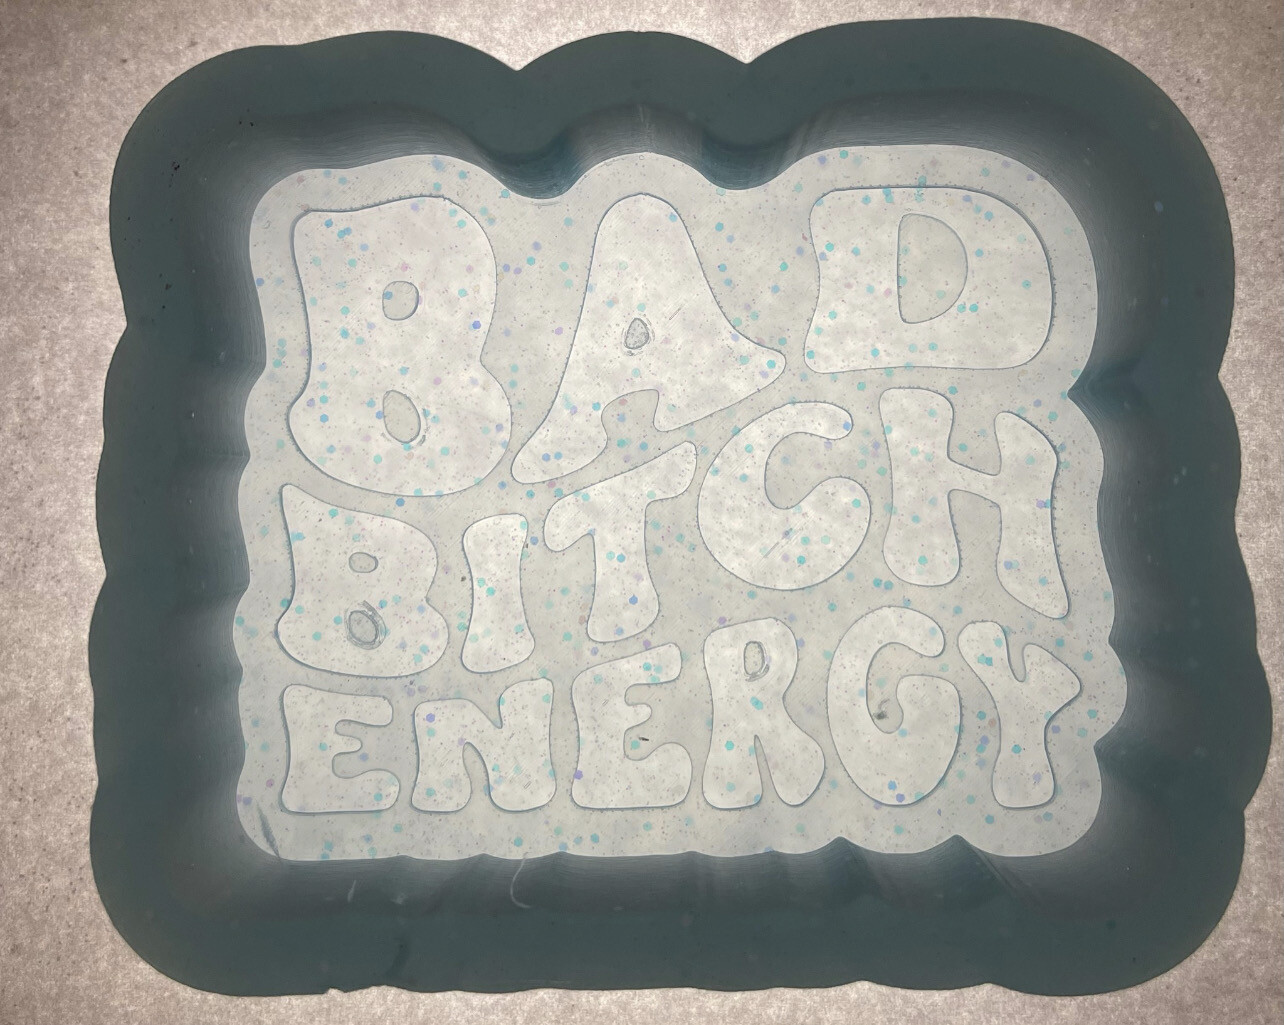 Bad B**ch Energy